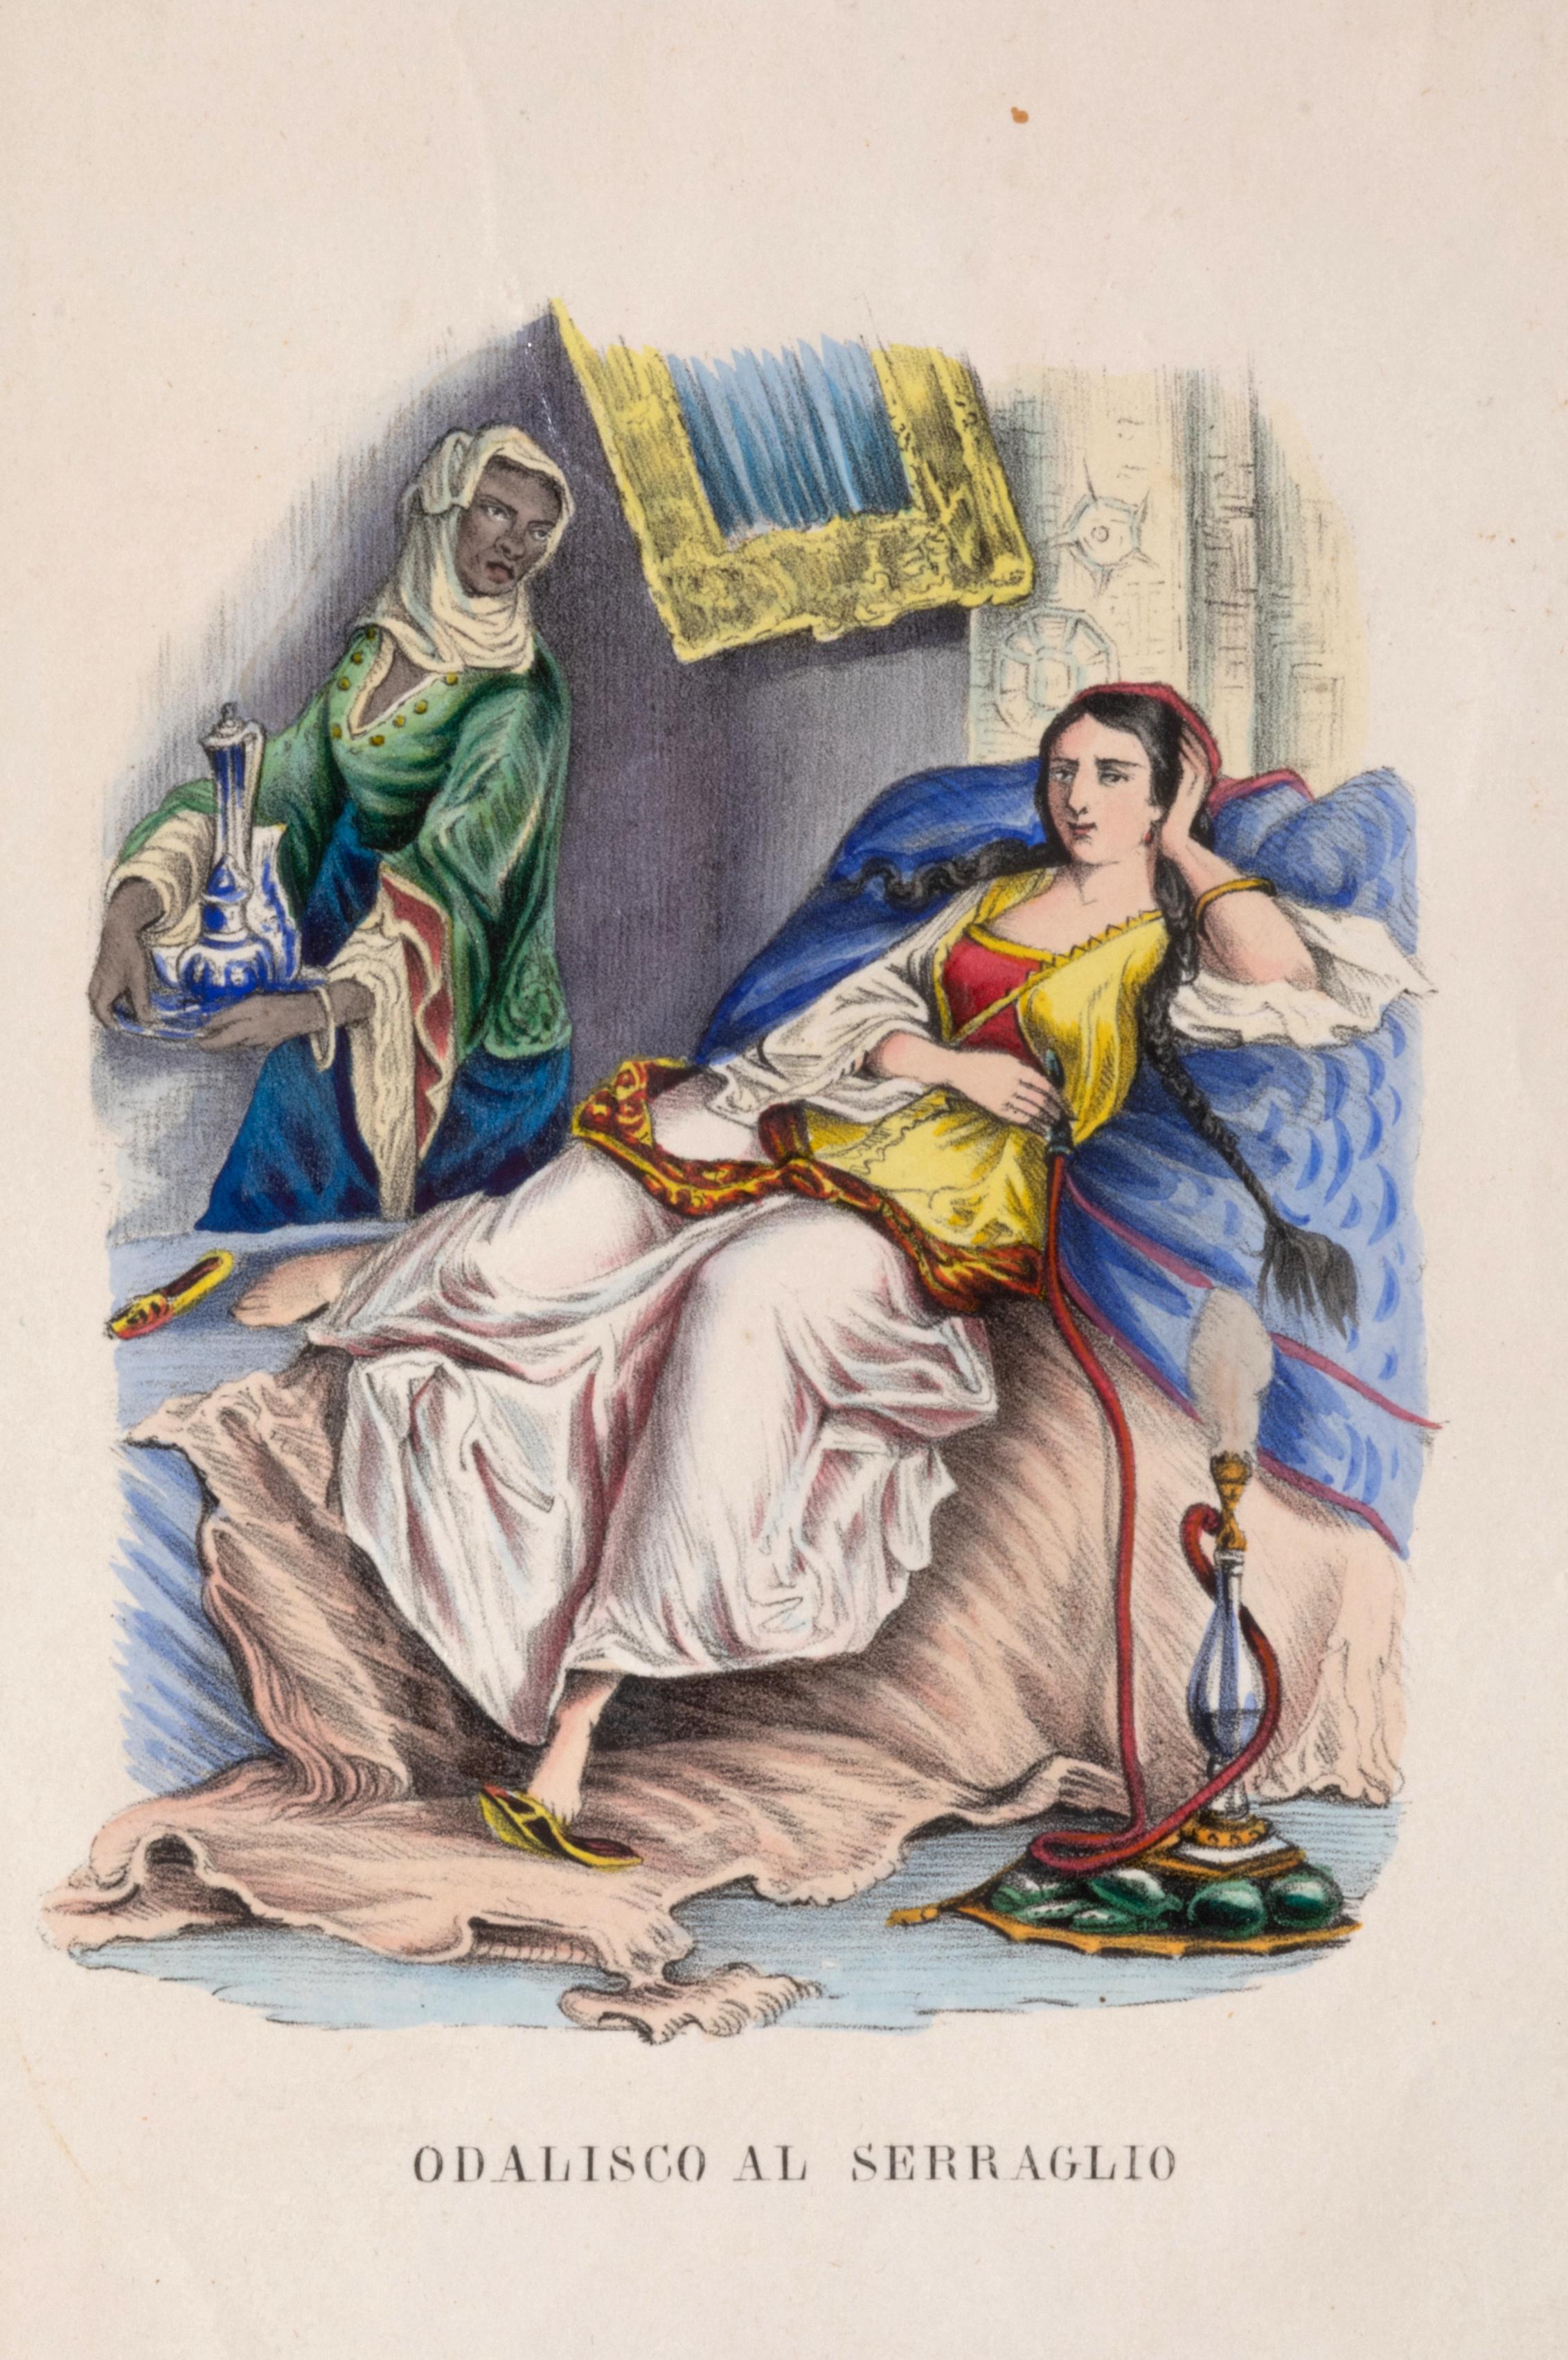 Unknown Figurative Art - Odalisque at the menagerie - Original Watercolor Lithograph - 1848 ca.